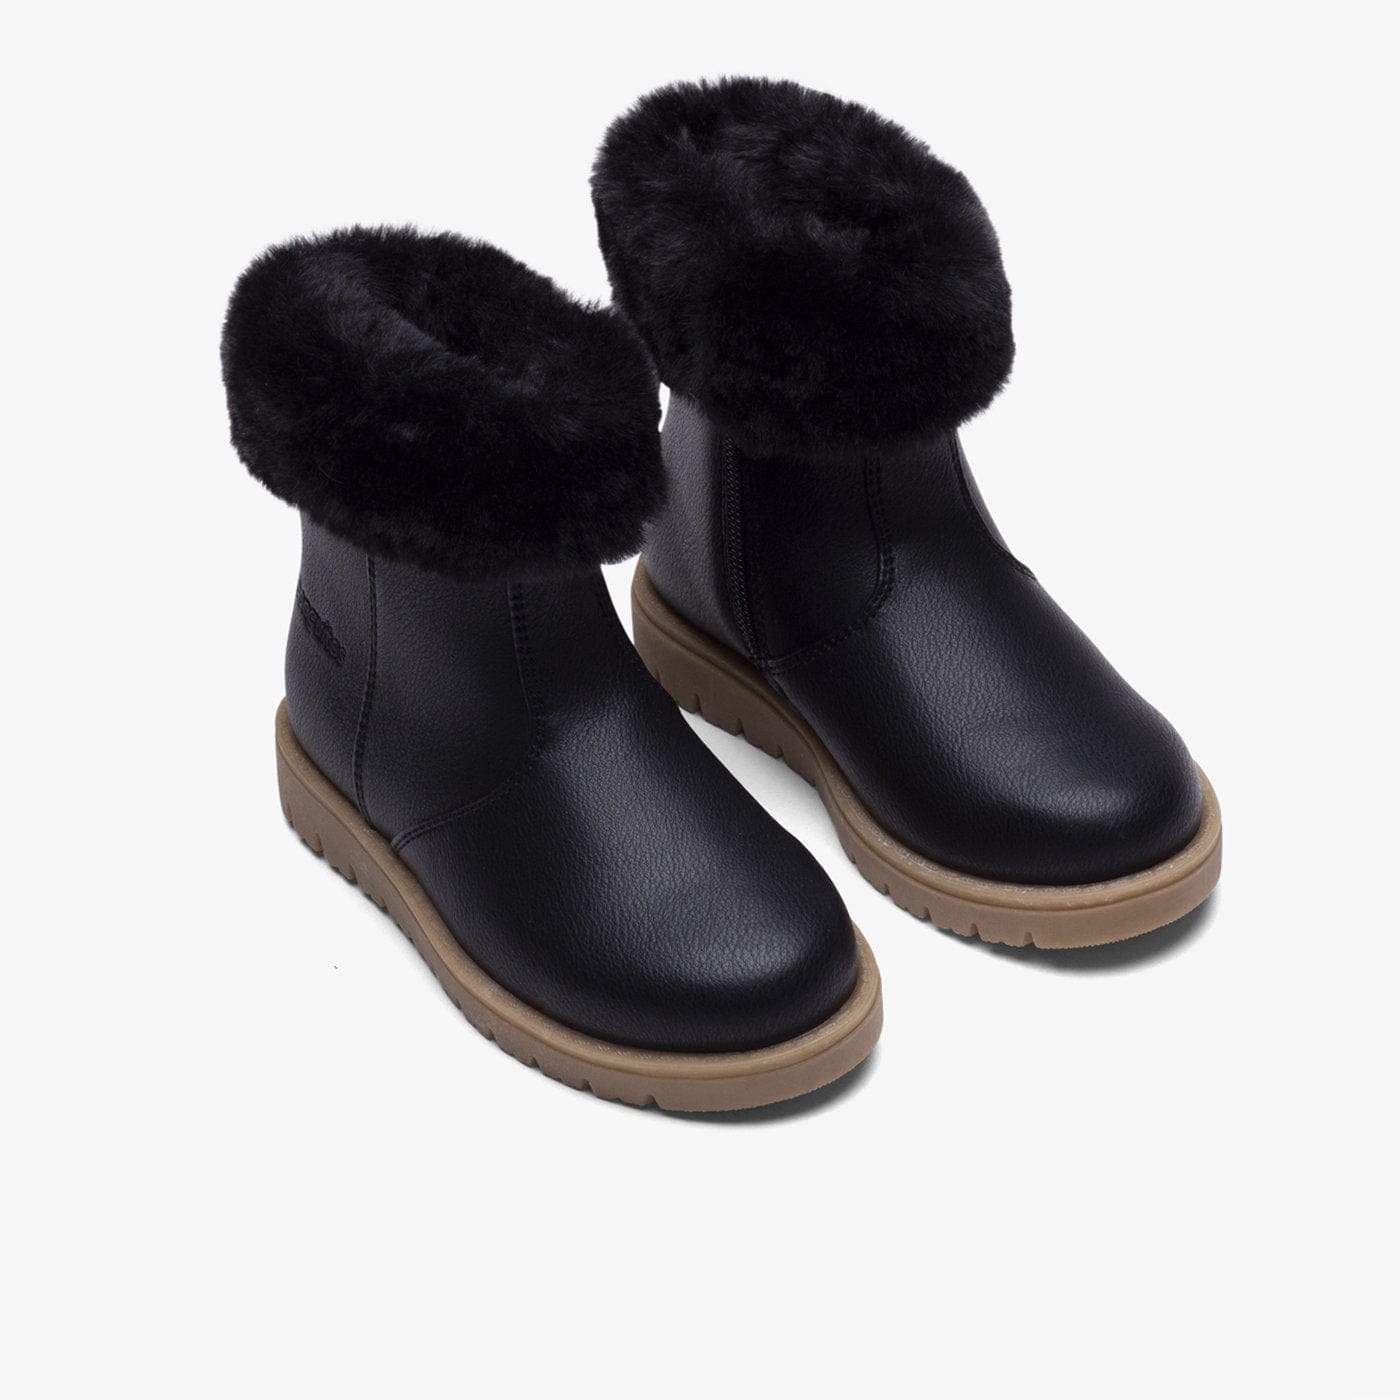 CONGUITOS Shoes Girl's Black Fur Boots